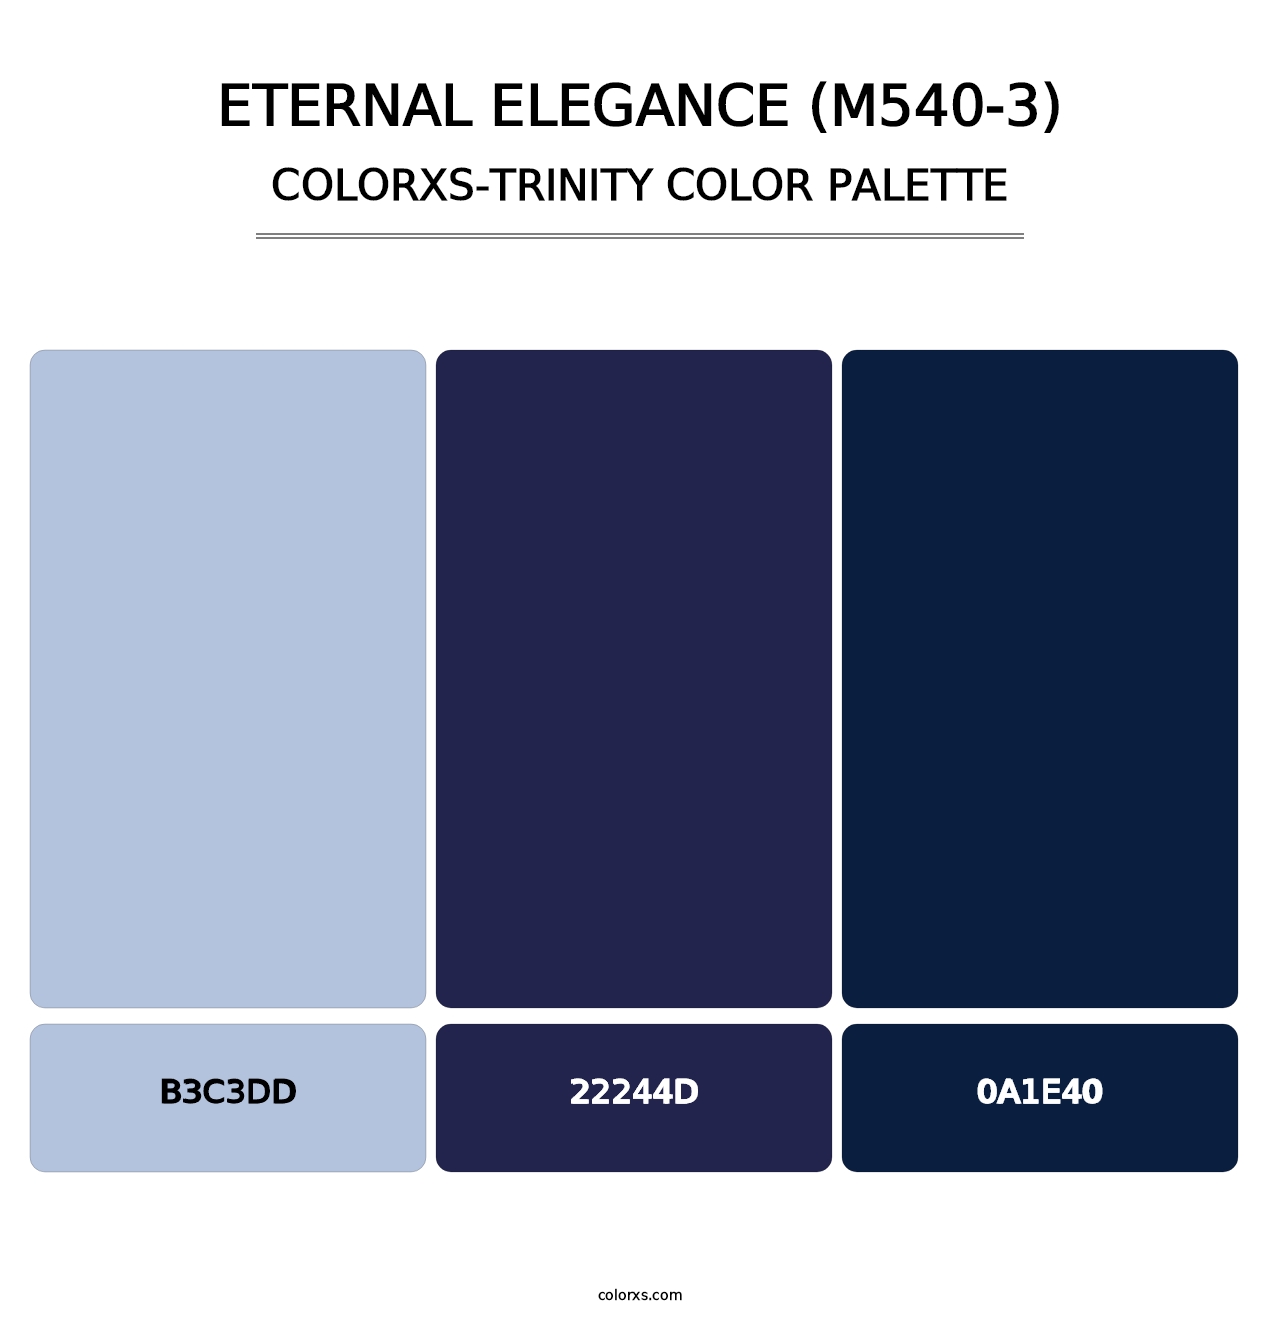 Eternal Elegance (M540-3) - Colorxs Trinity Palette